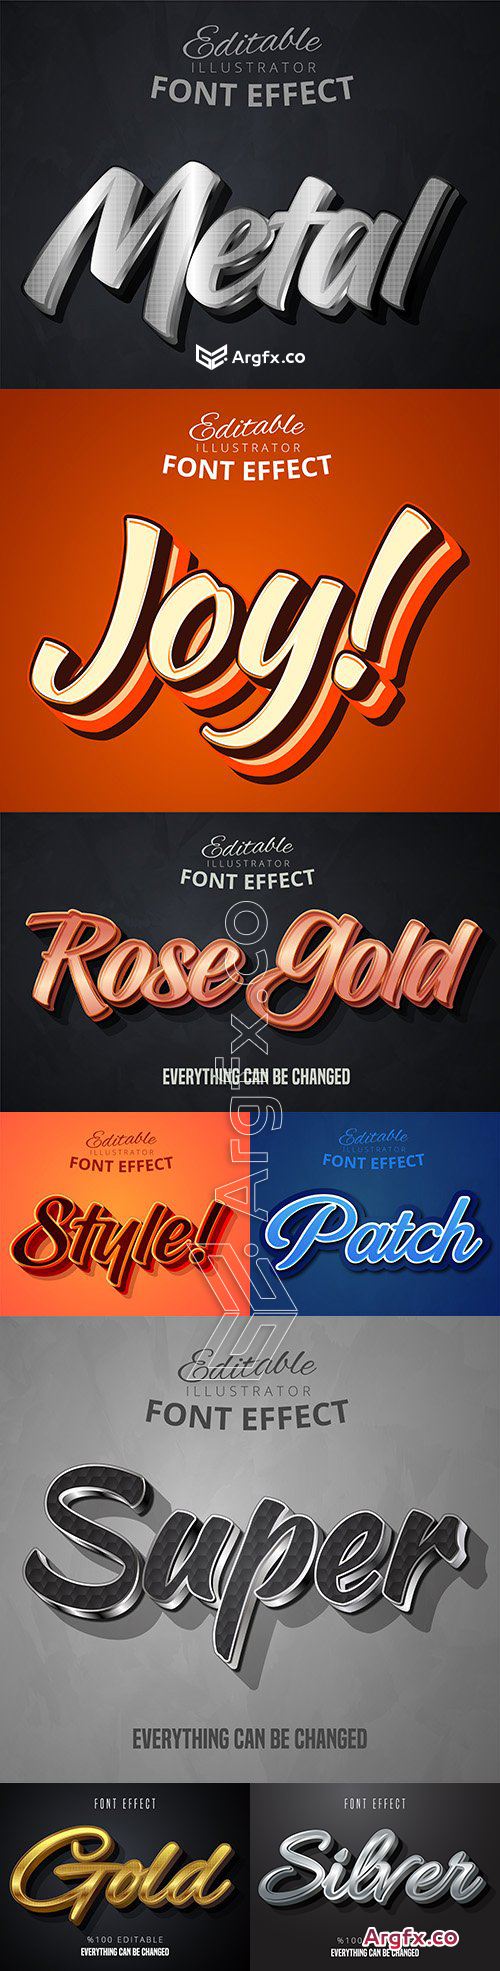 3d font effect editable text collection illustration 7